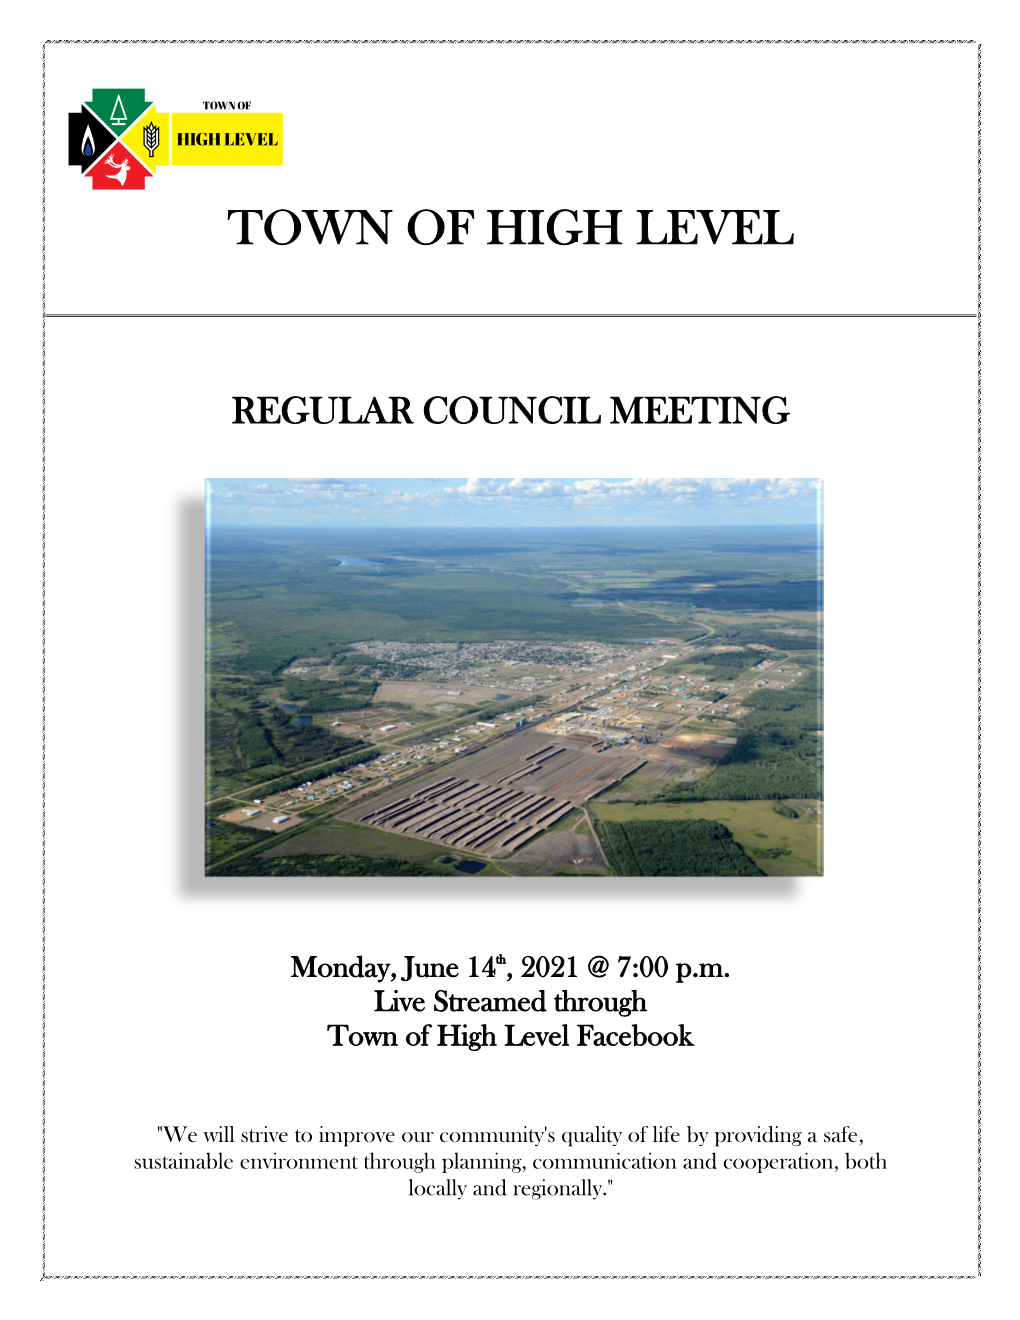 Town Council Regular Meeting Agenda